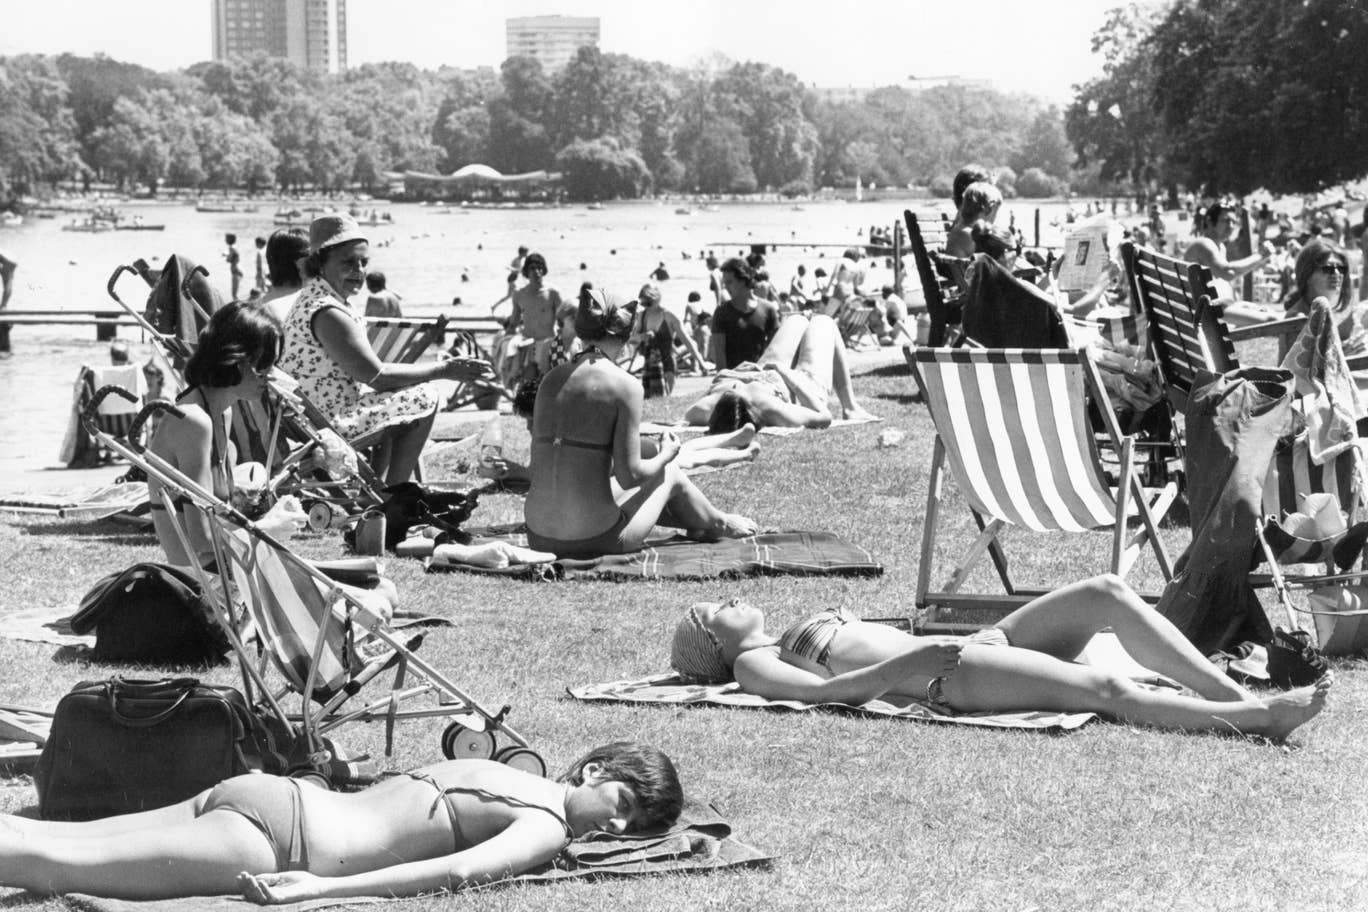 Sunbathers enjoy the heatwave by the Serpentine in Hyde Park